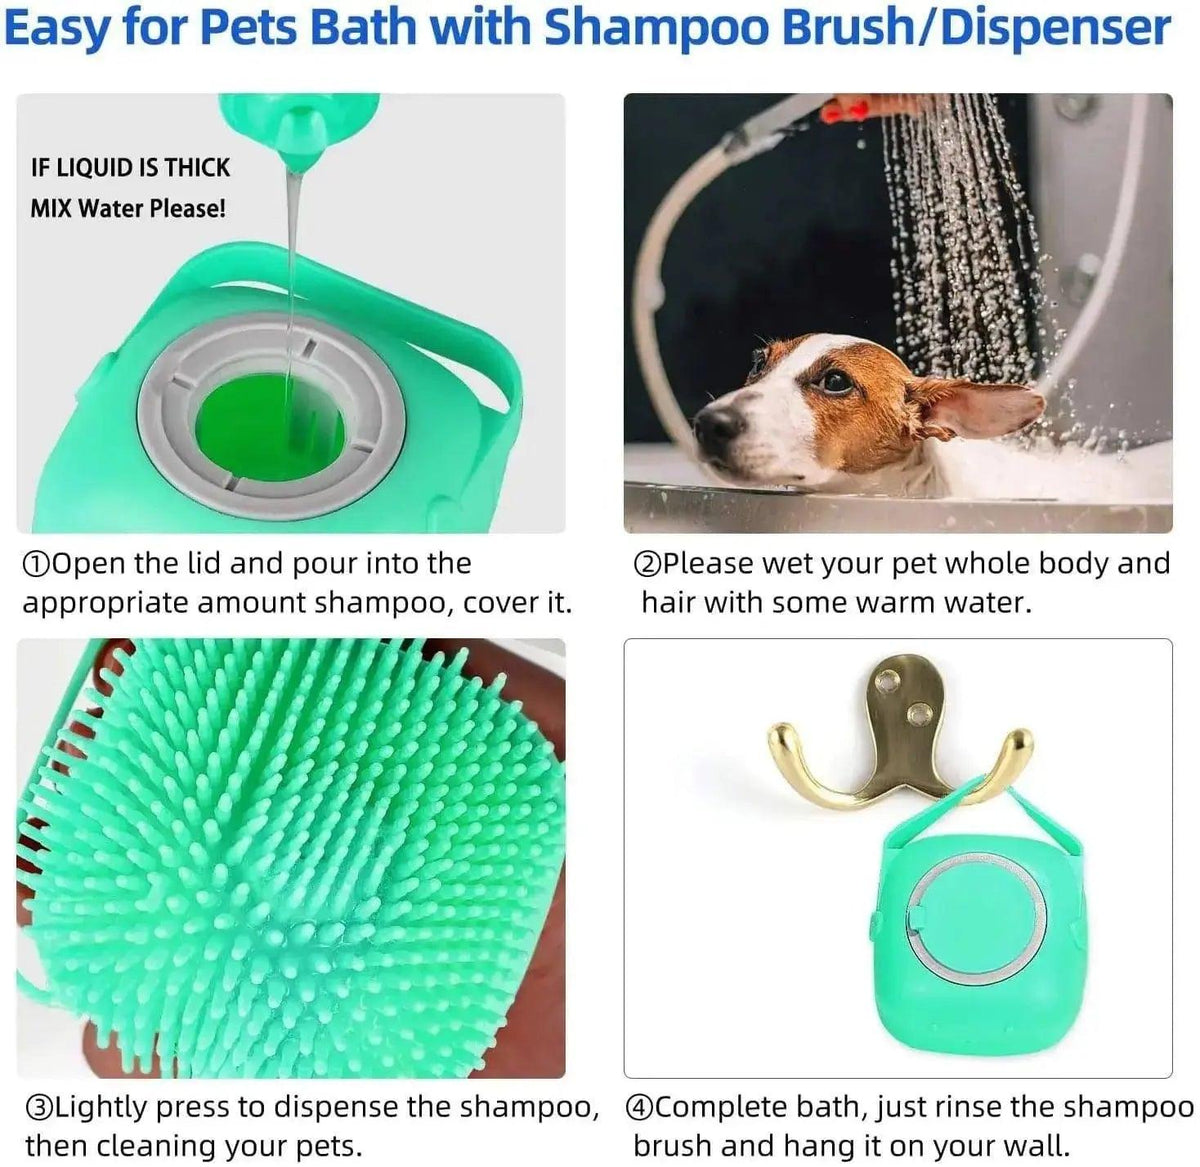 Pet Dog Shampoo Massager Brush Cat Massage Comb Grooming Scrubber Shower Brush For Bathing Short Hair Soft Silicone Brushes - TikTokFavorites